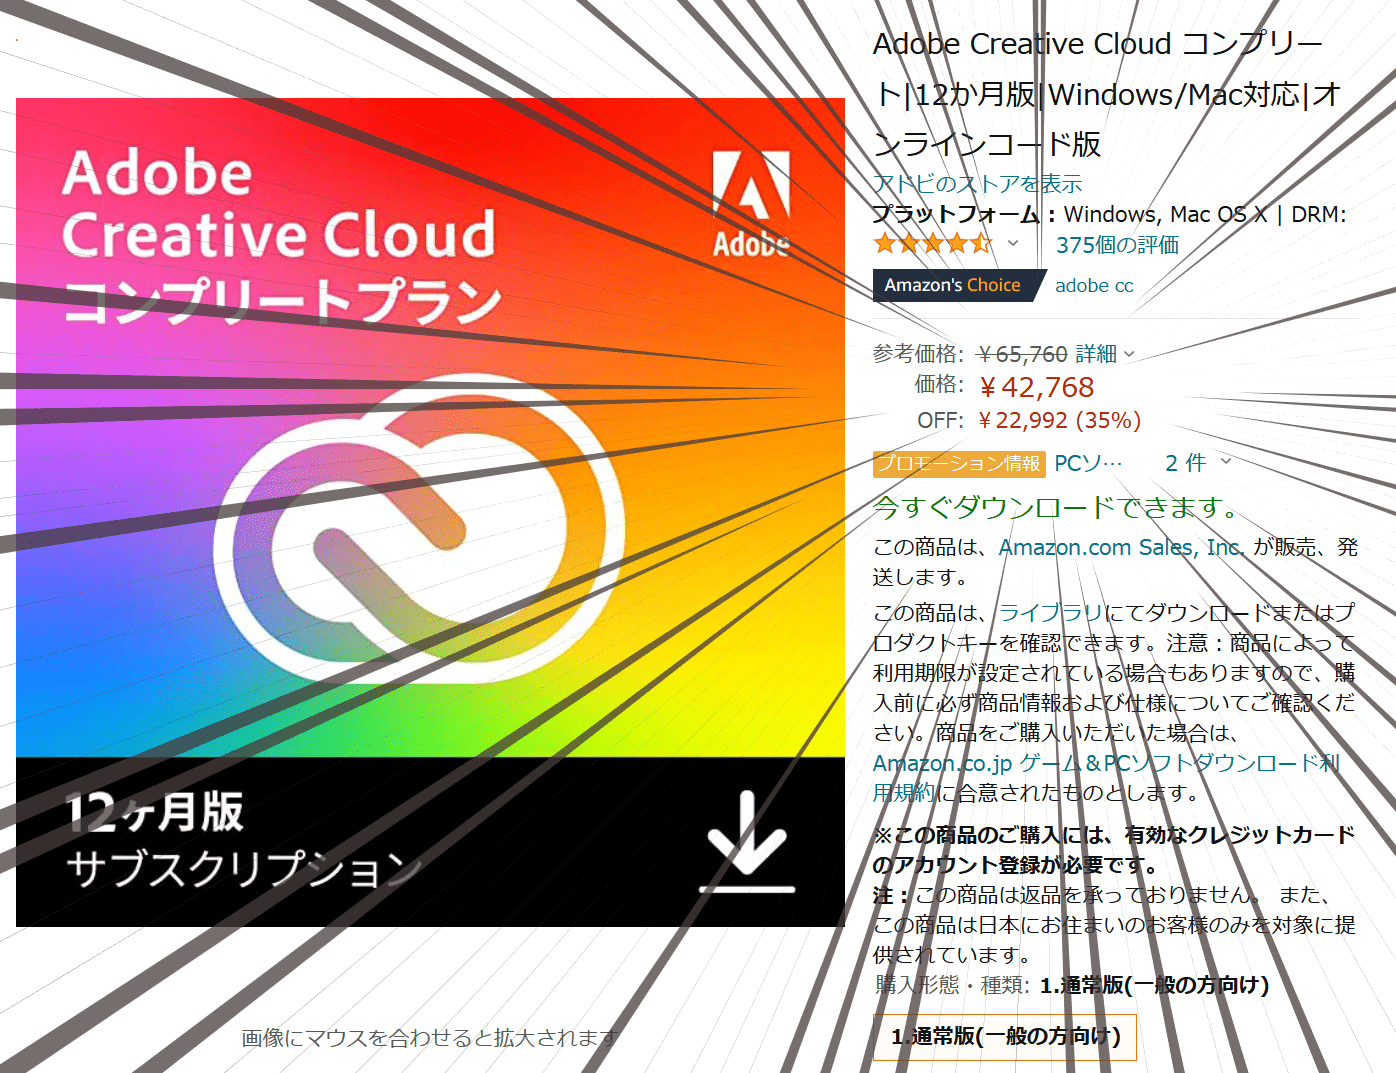 Adobe Photoshop CC 12ヶ月分 サブスクリプション